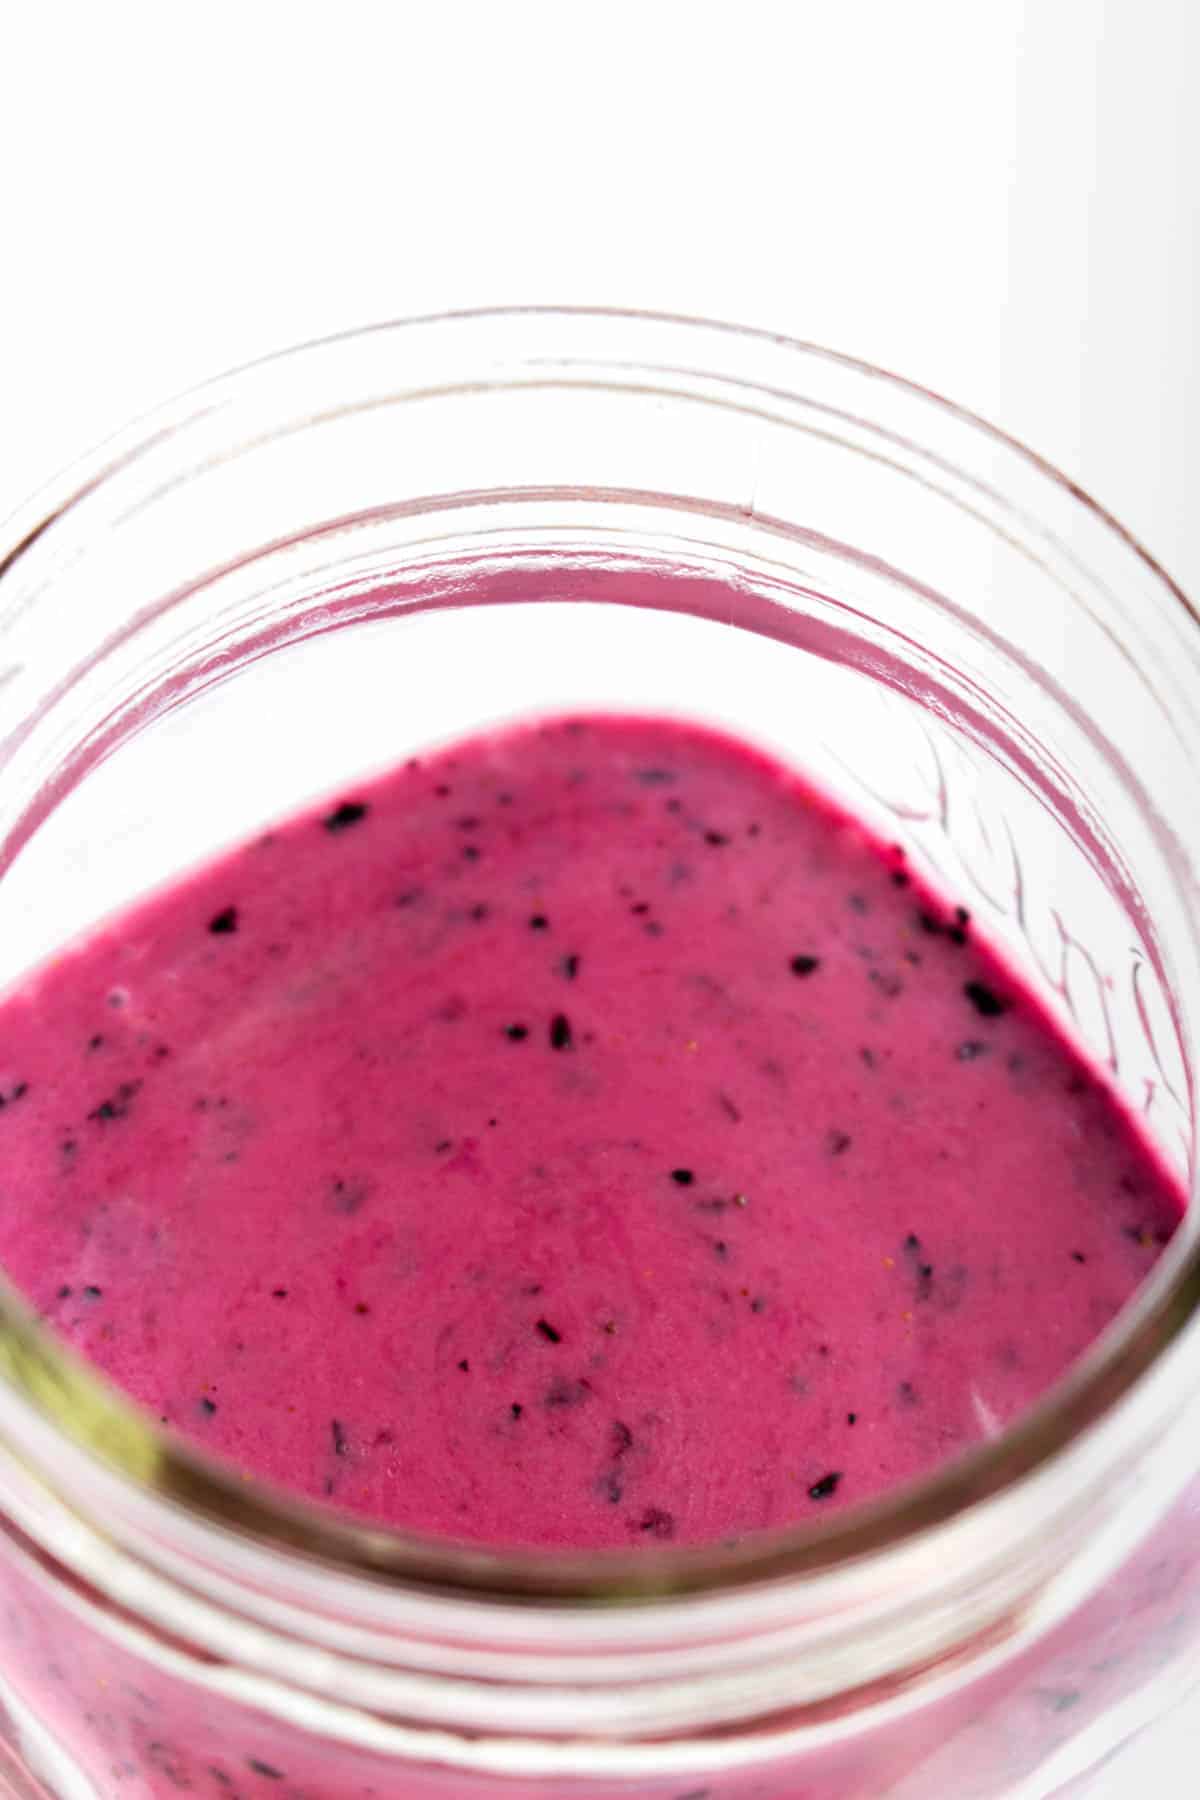 Close up of a jar of blueberry vinaigrette.